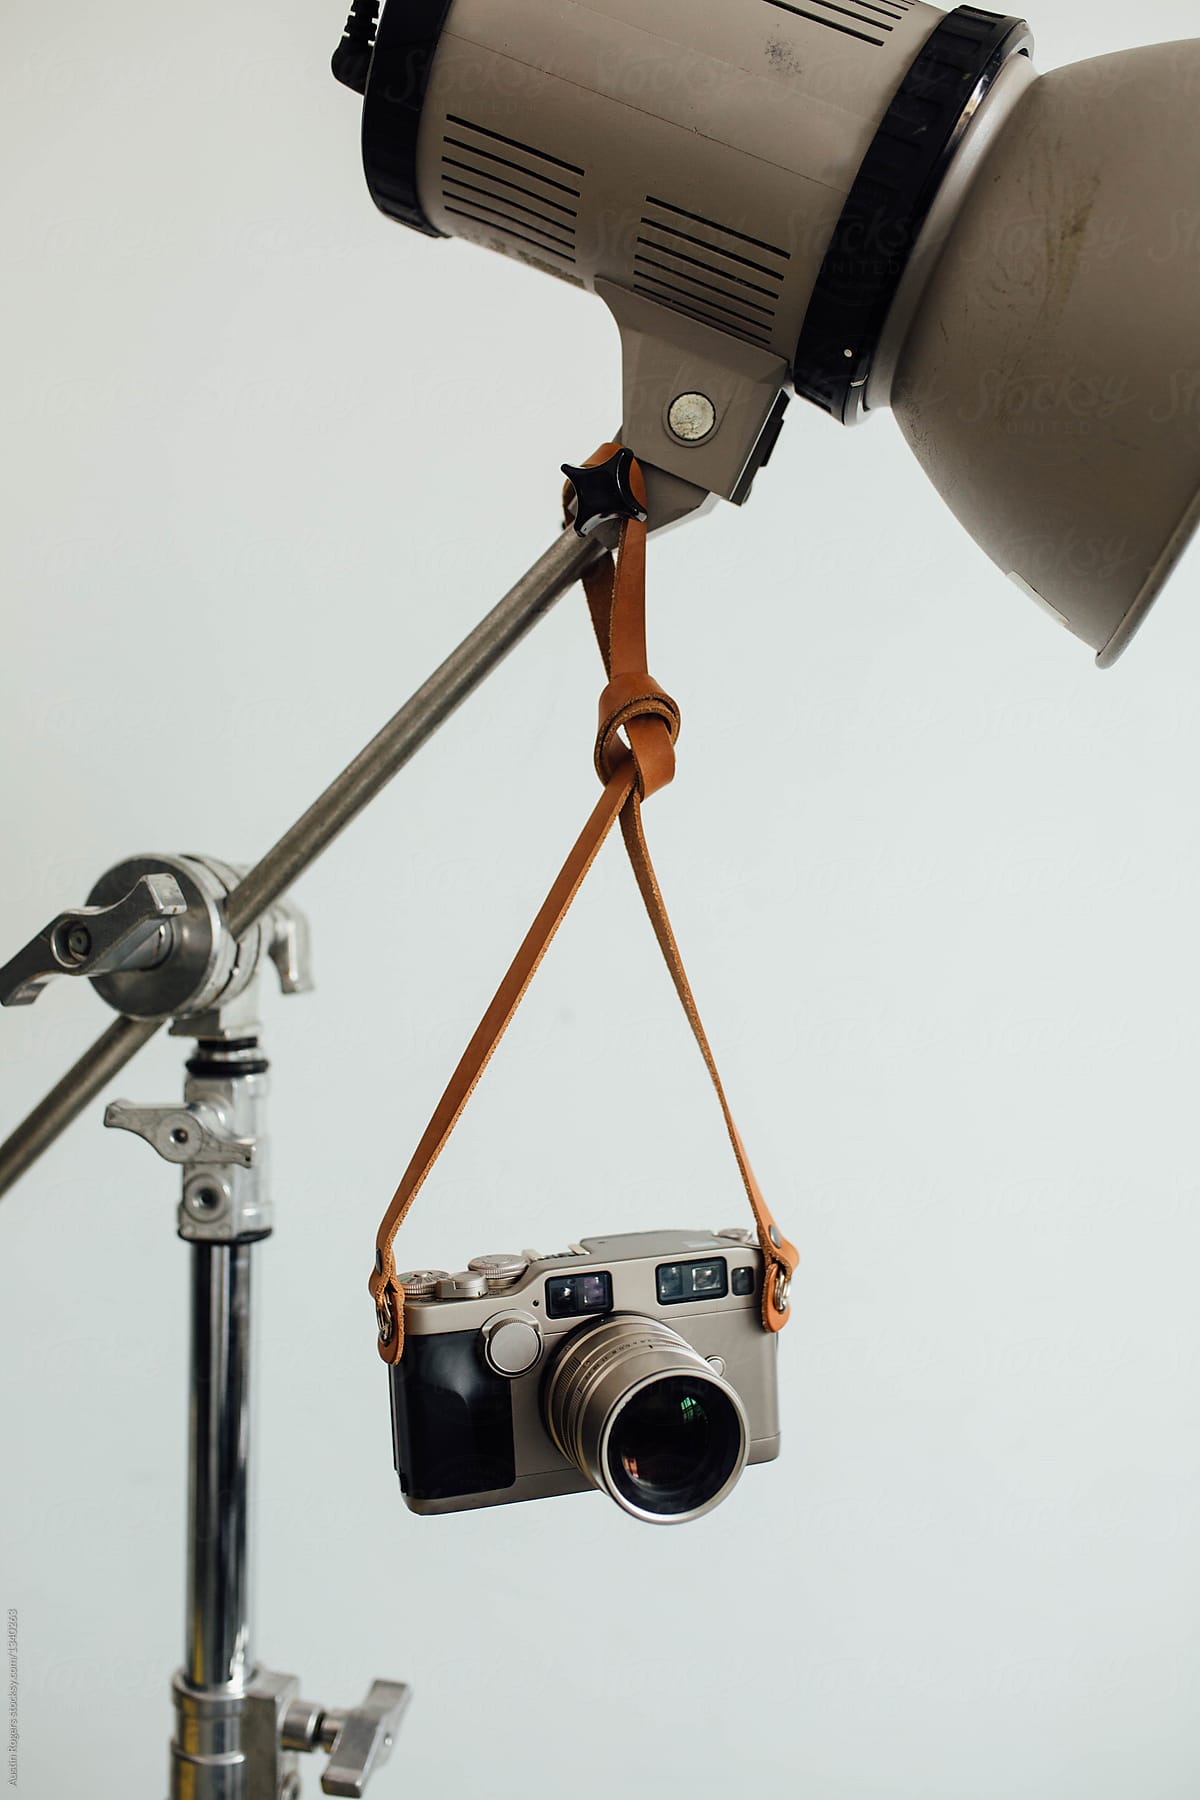 Rangefinder Style Camera Hanging from Strap on Studio Flash